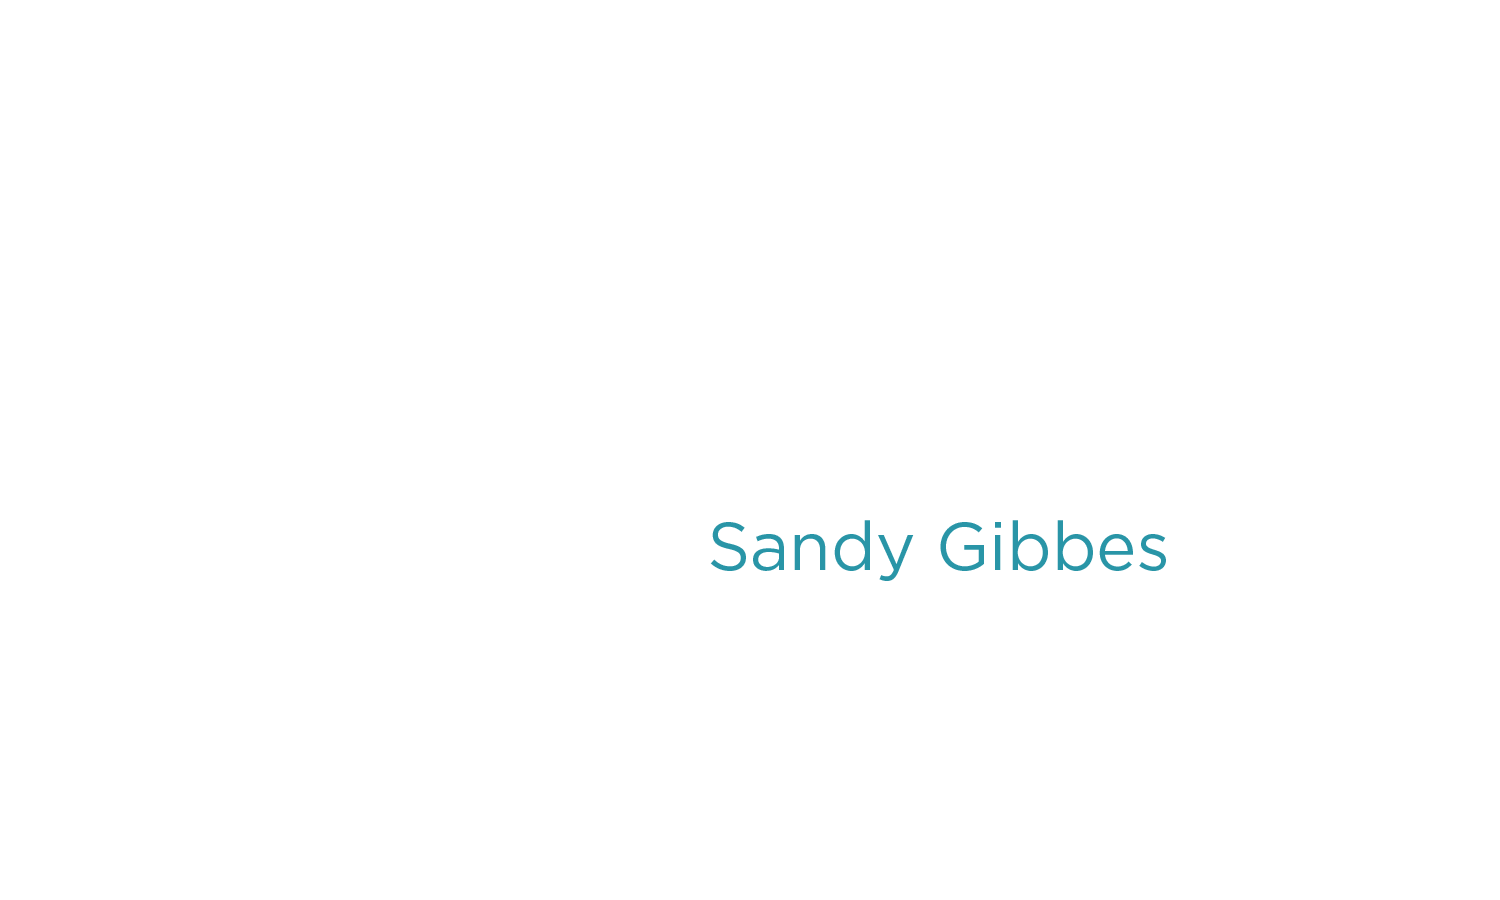 Sandy Gibbes - Sandy Gibbes